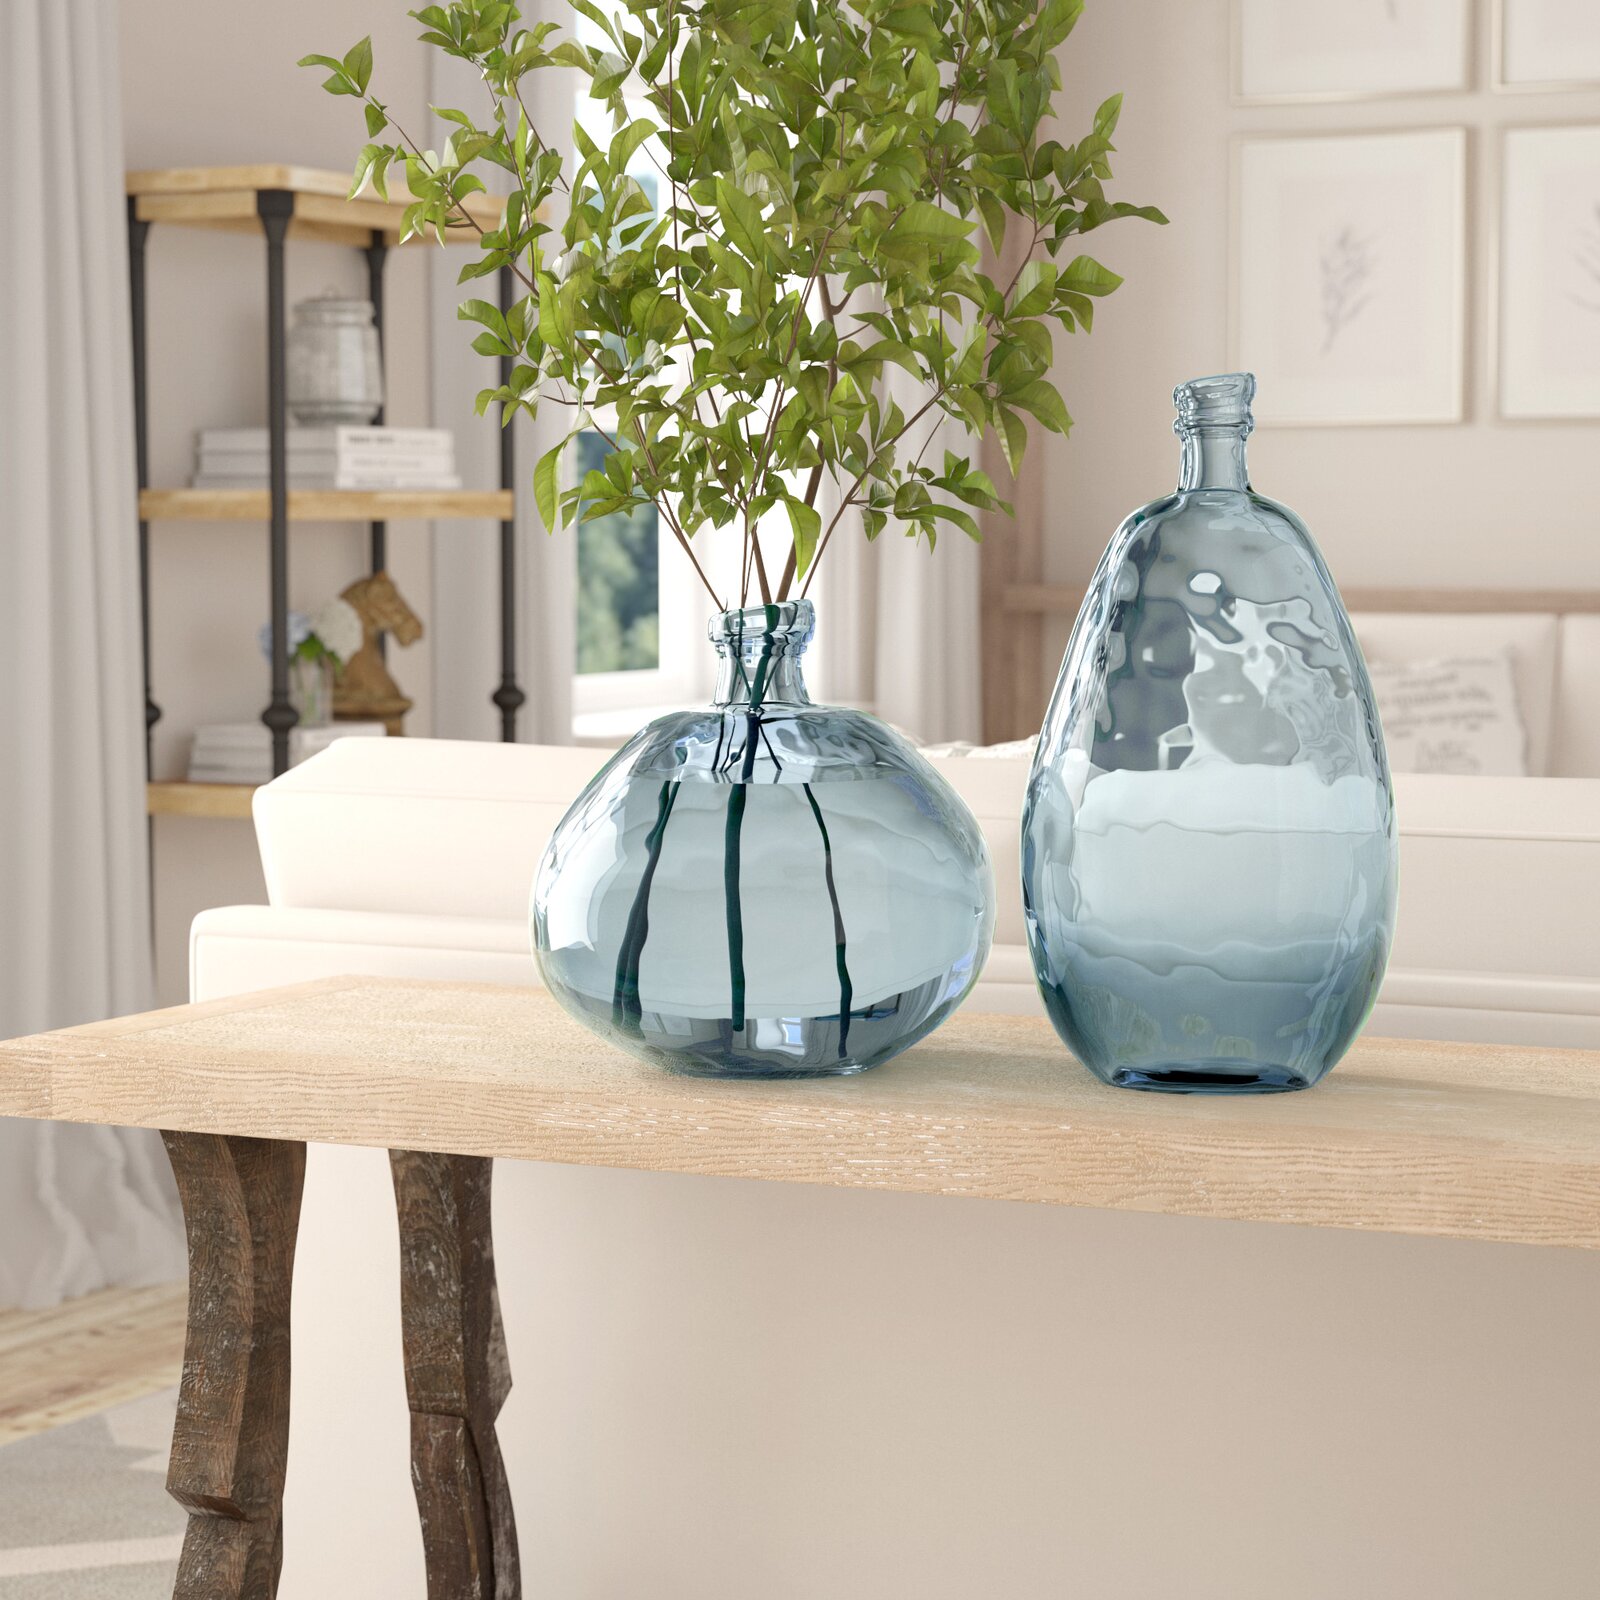 decorative vases ideas